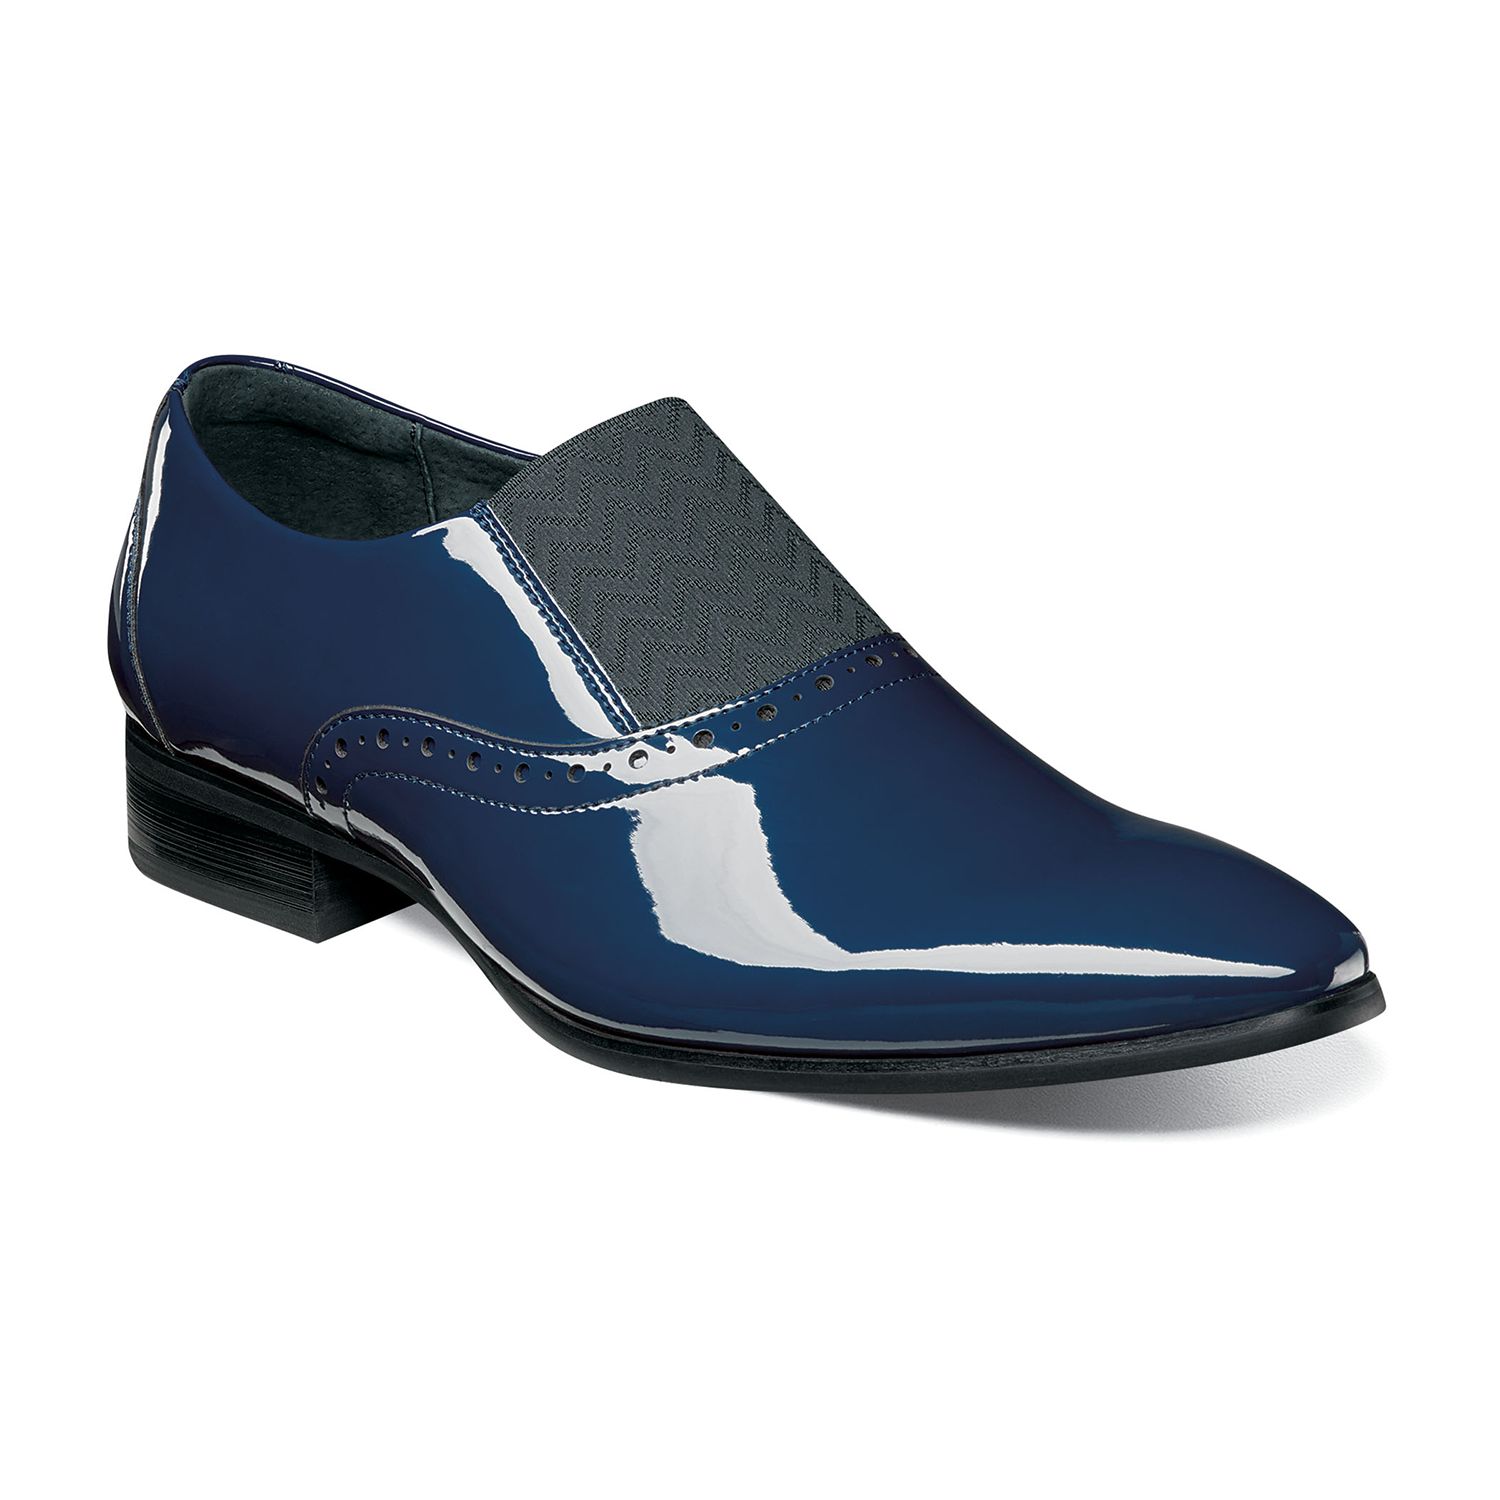 kohl's navy blue dress shoes